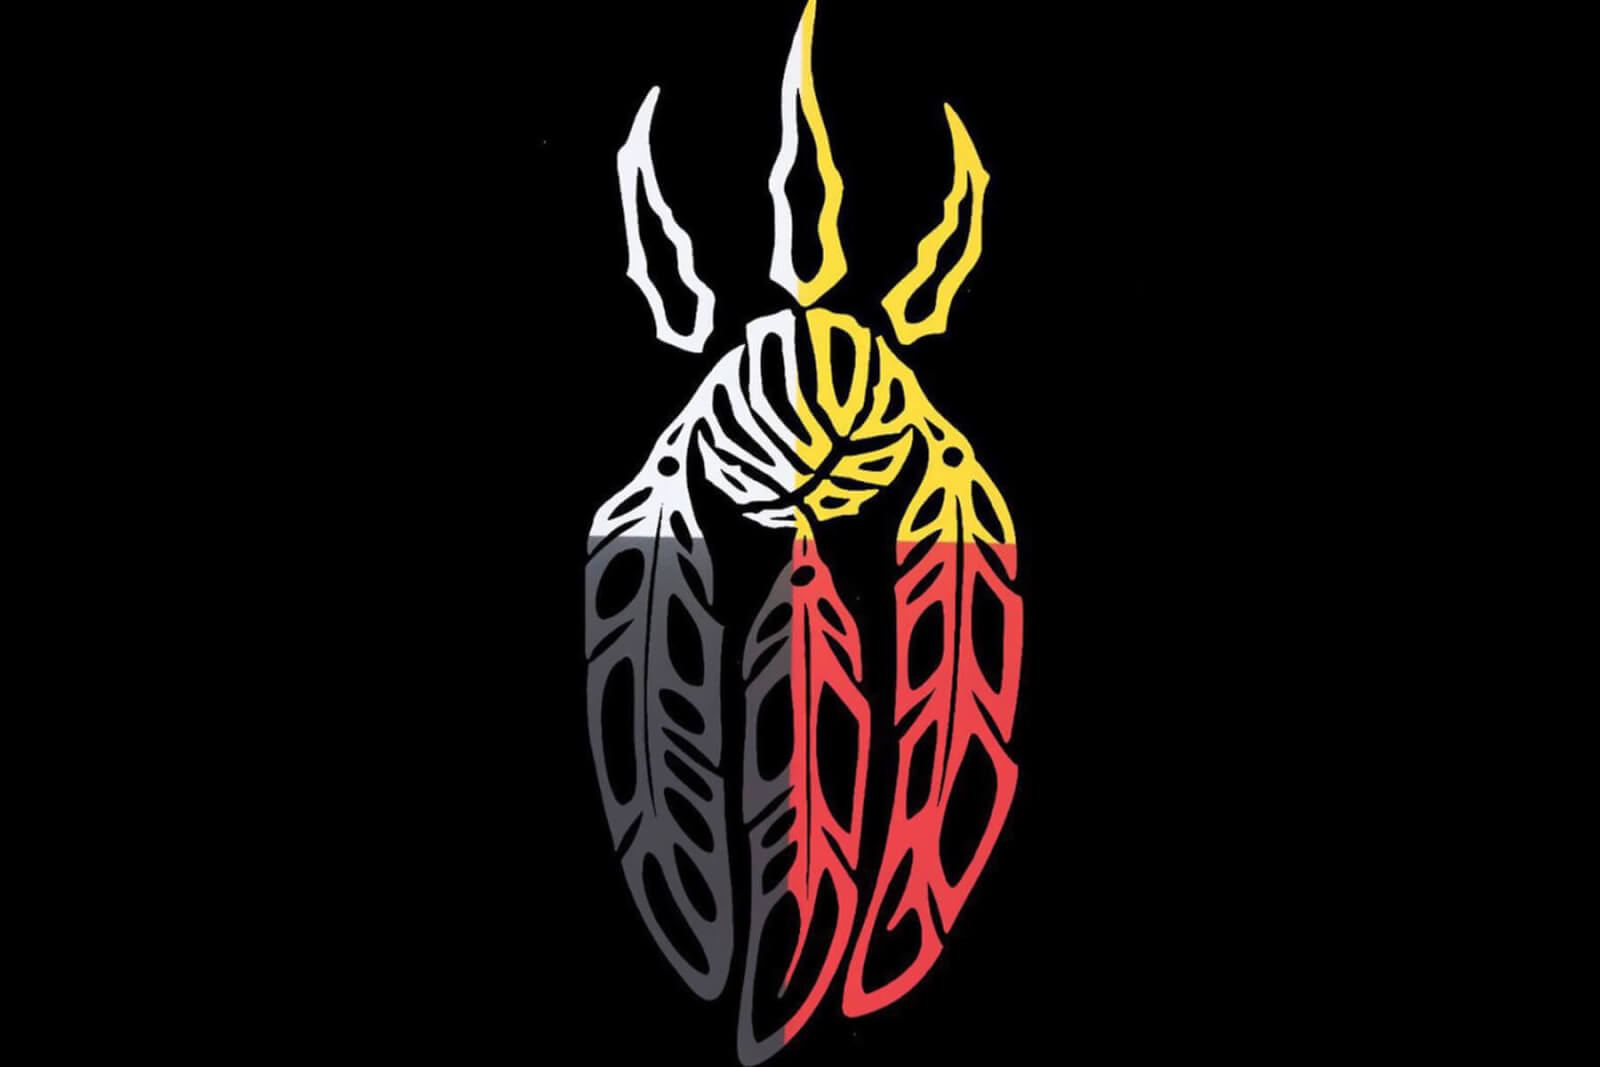 Toronto Raptors on X: Tonight, we celebrate Indigenous Heritage